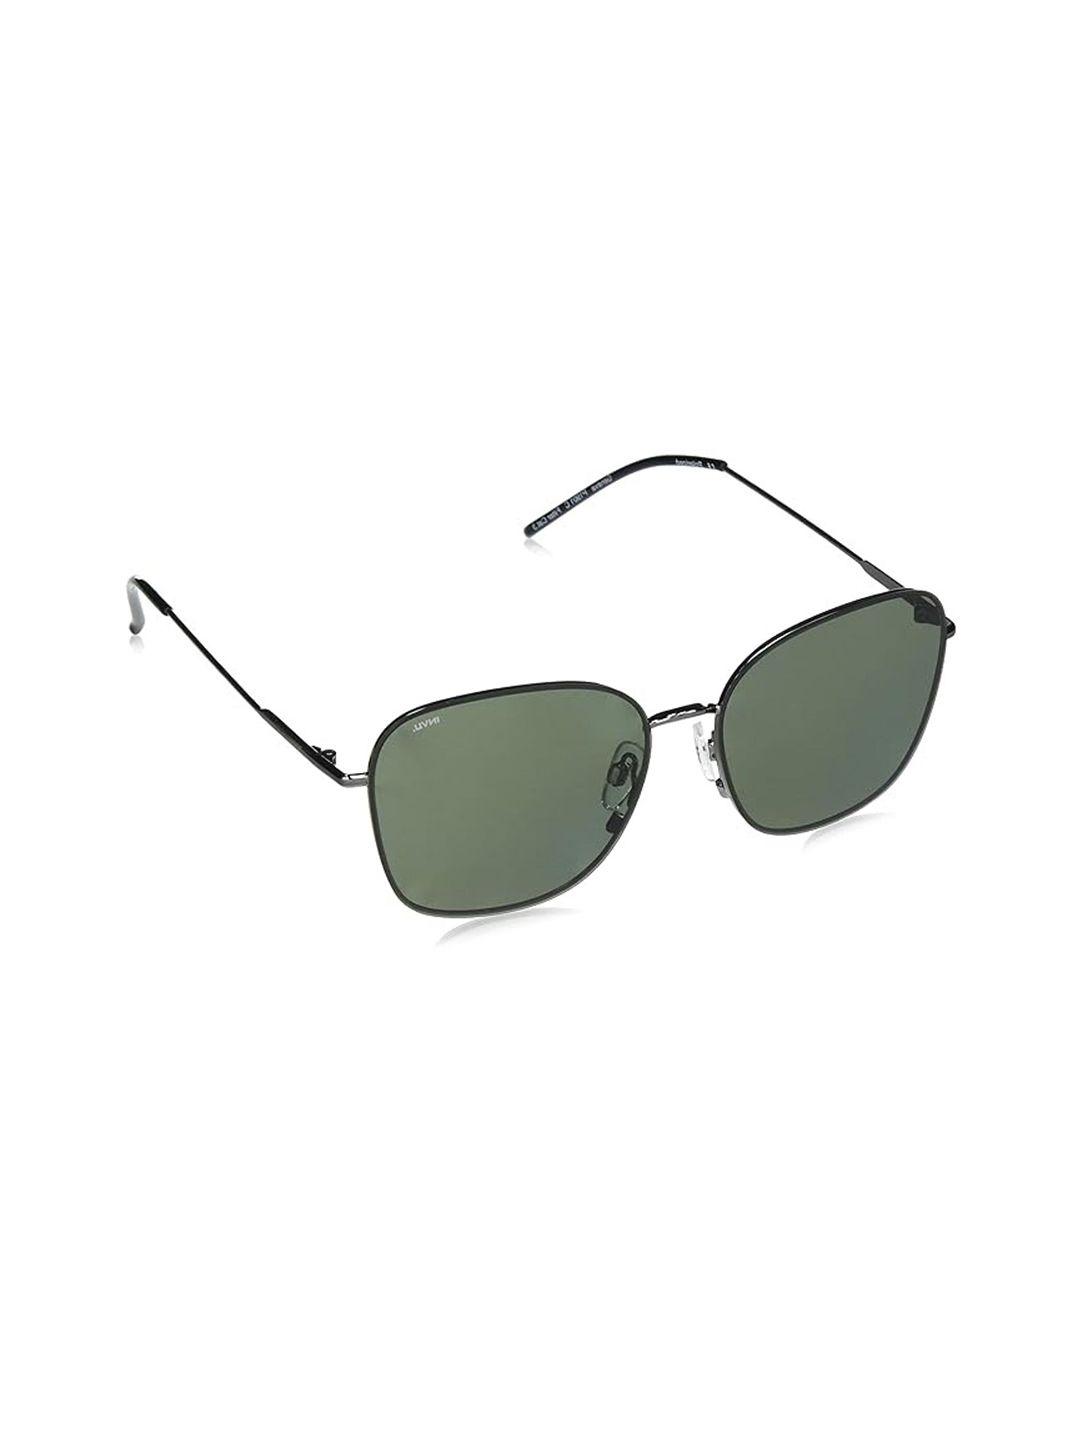 invu unisex rectangle sunglasses with uv protected lens p1901c